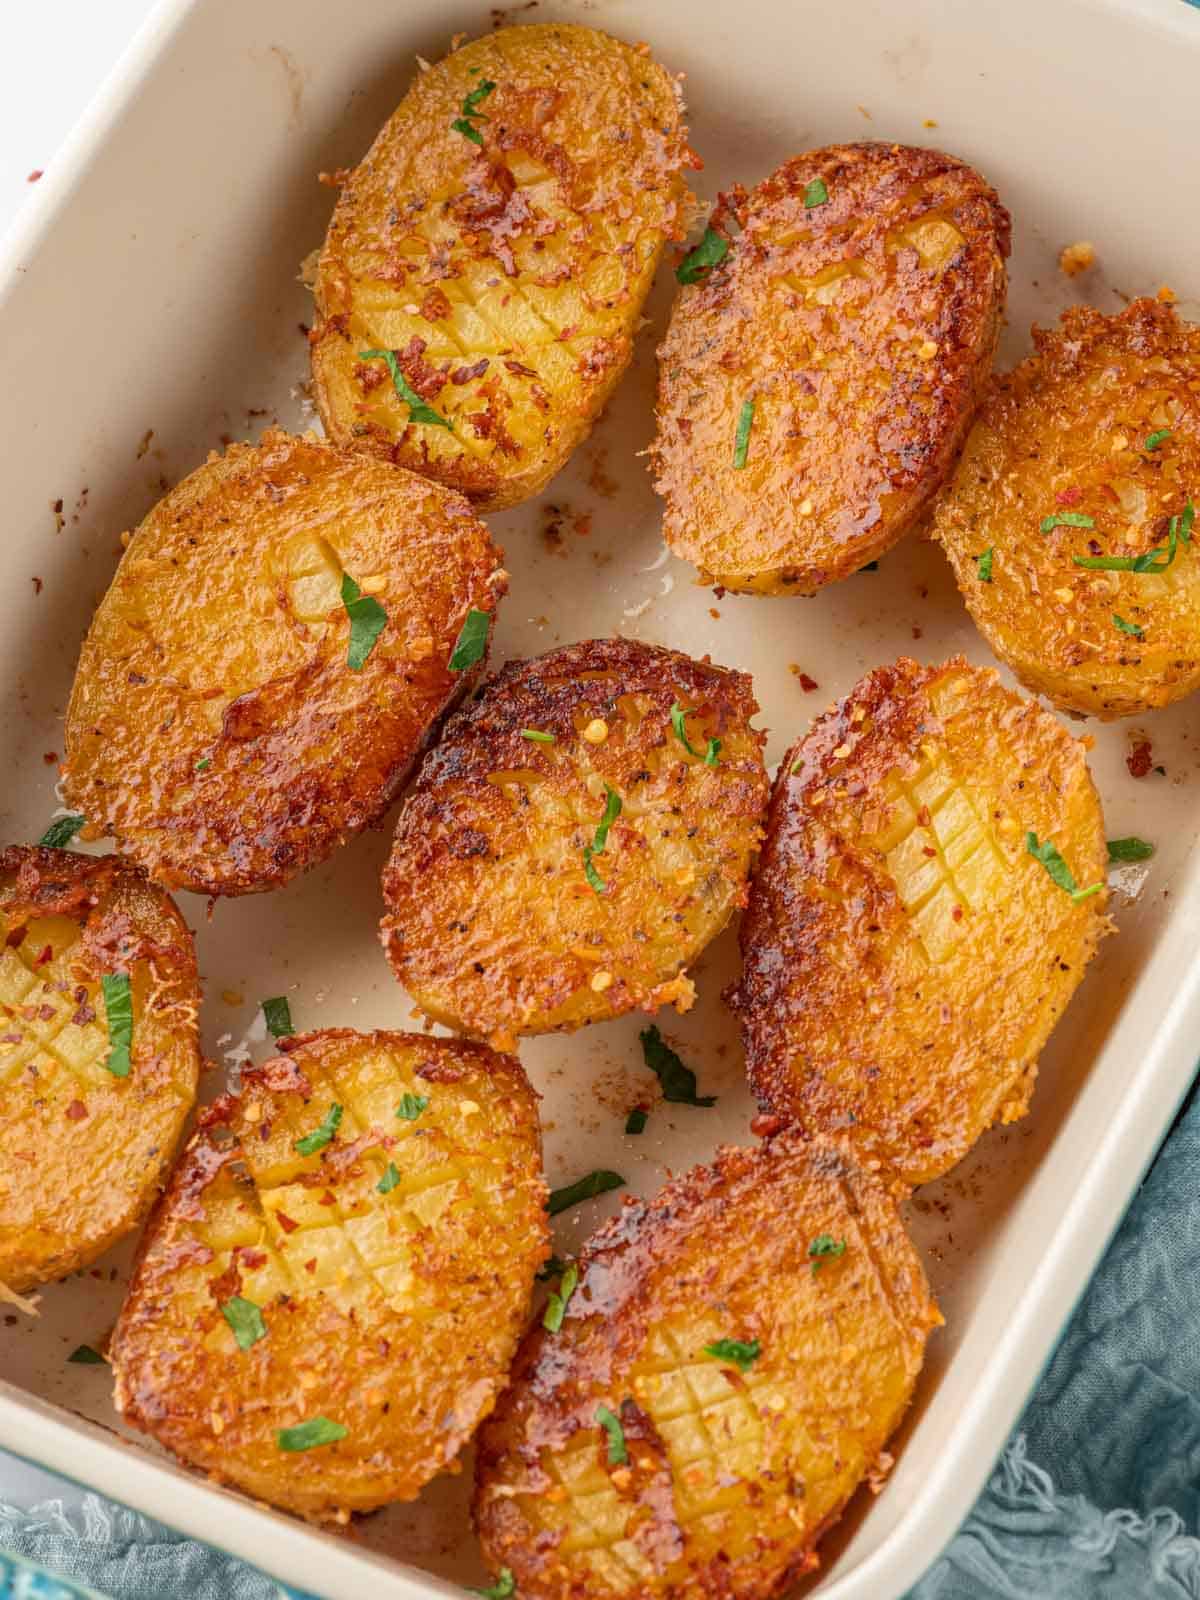 Viral parmesan-crusted potatoes in a baking dish.